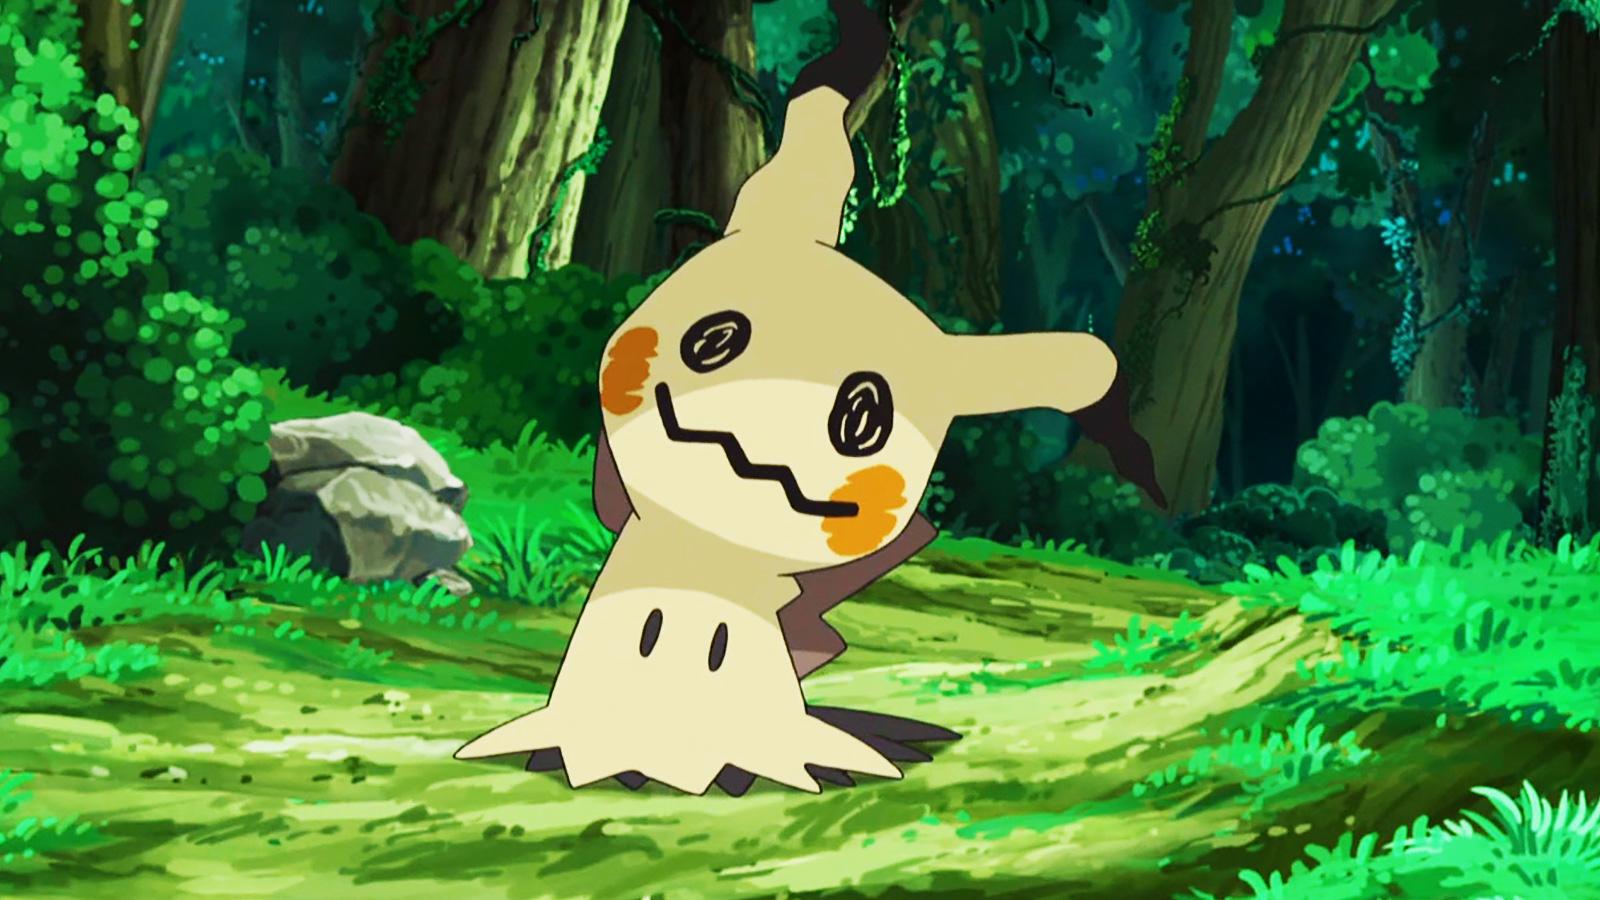 Ghost-type Pokemon weaknesses & resistances explained - Dexerto